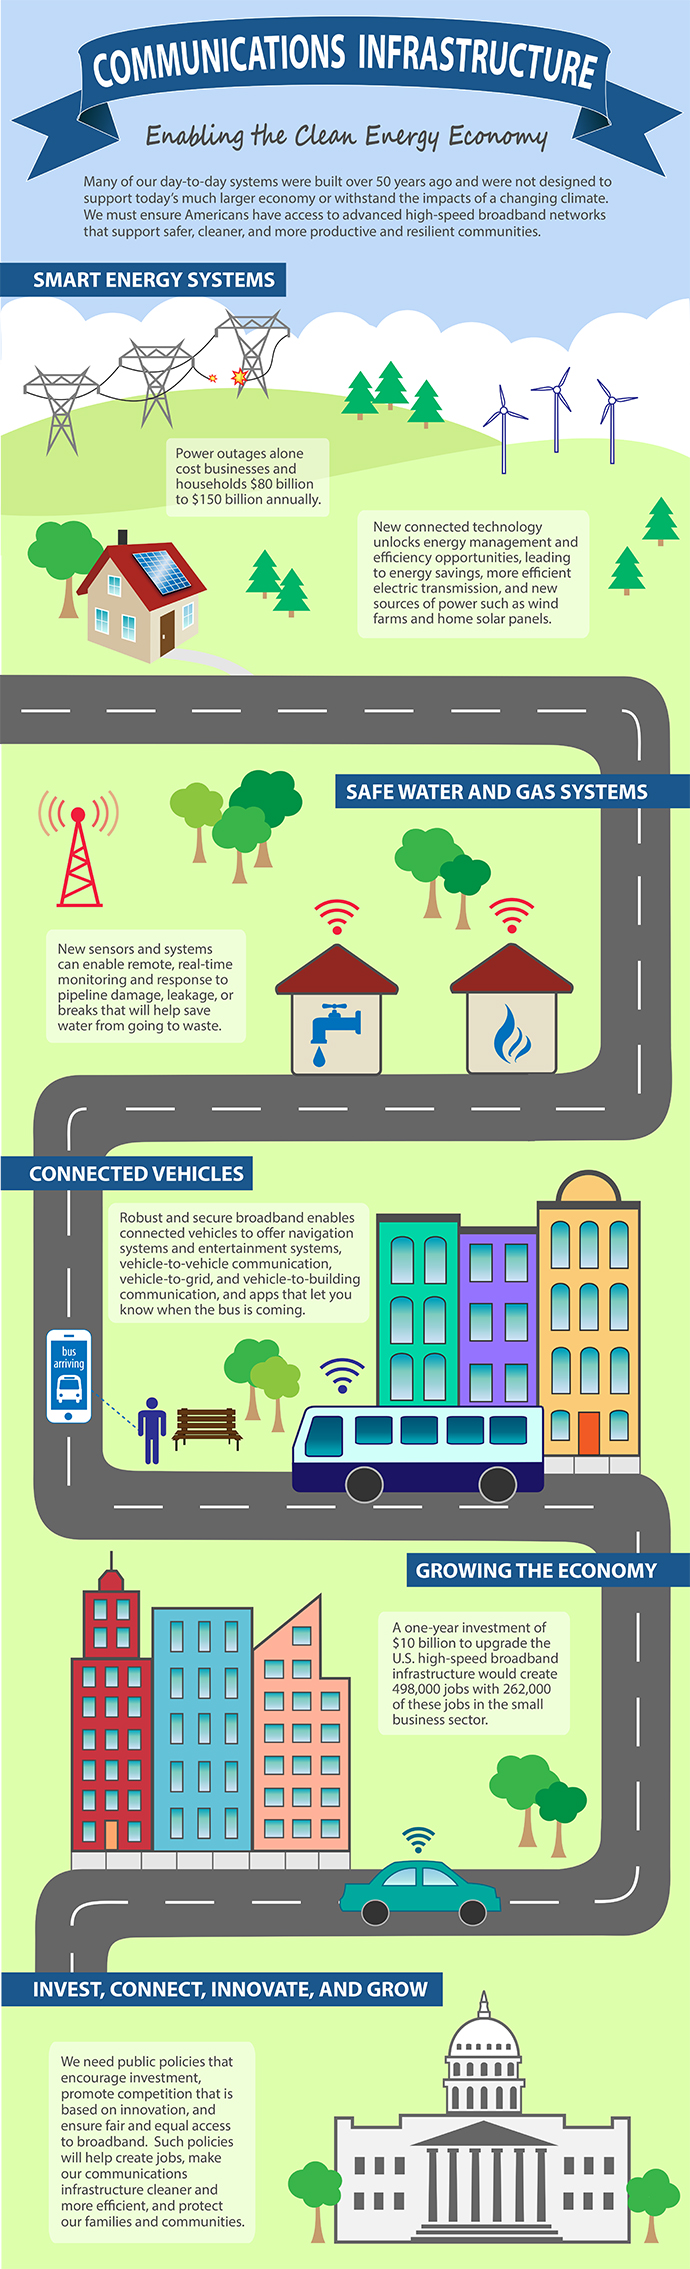 Communications Infrastructure - BlueGreen Alliance Infographic